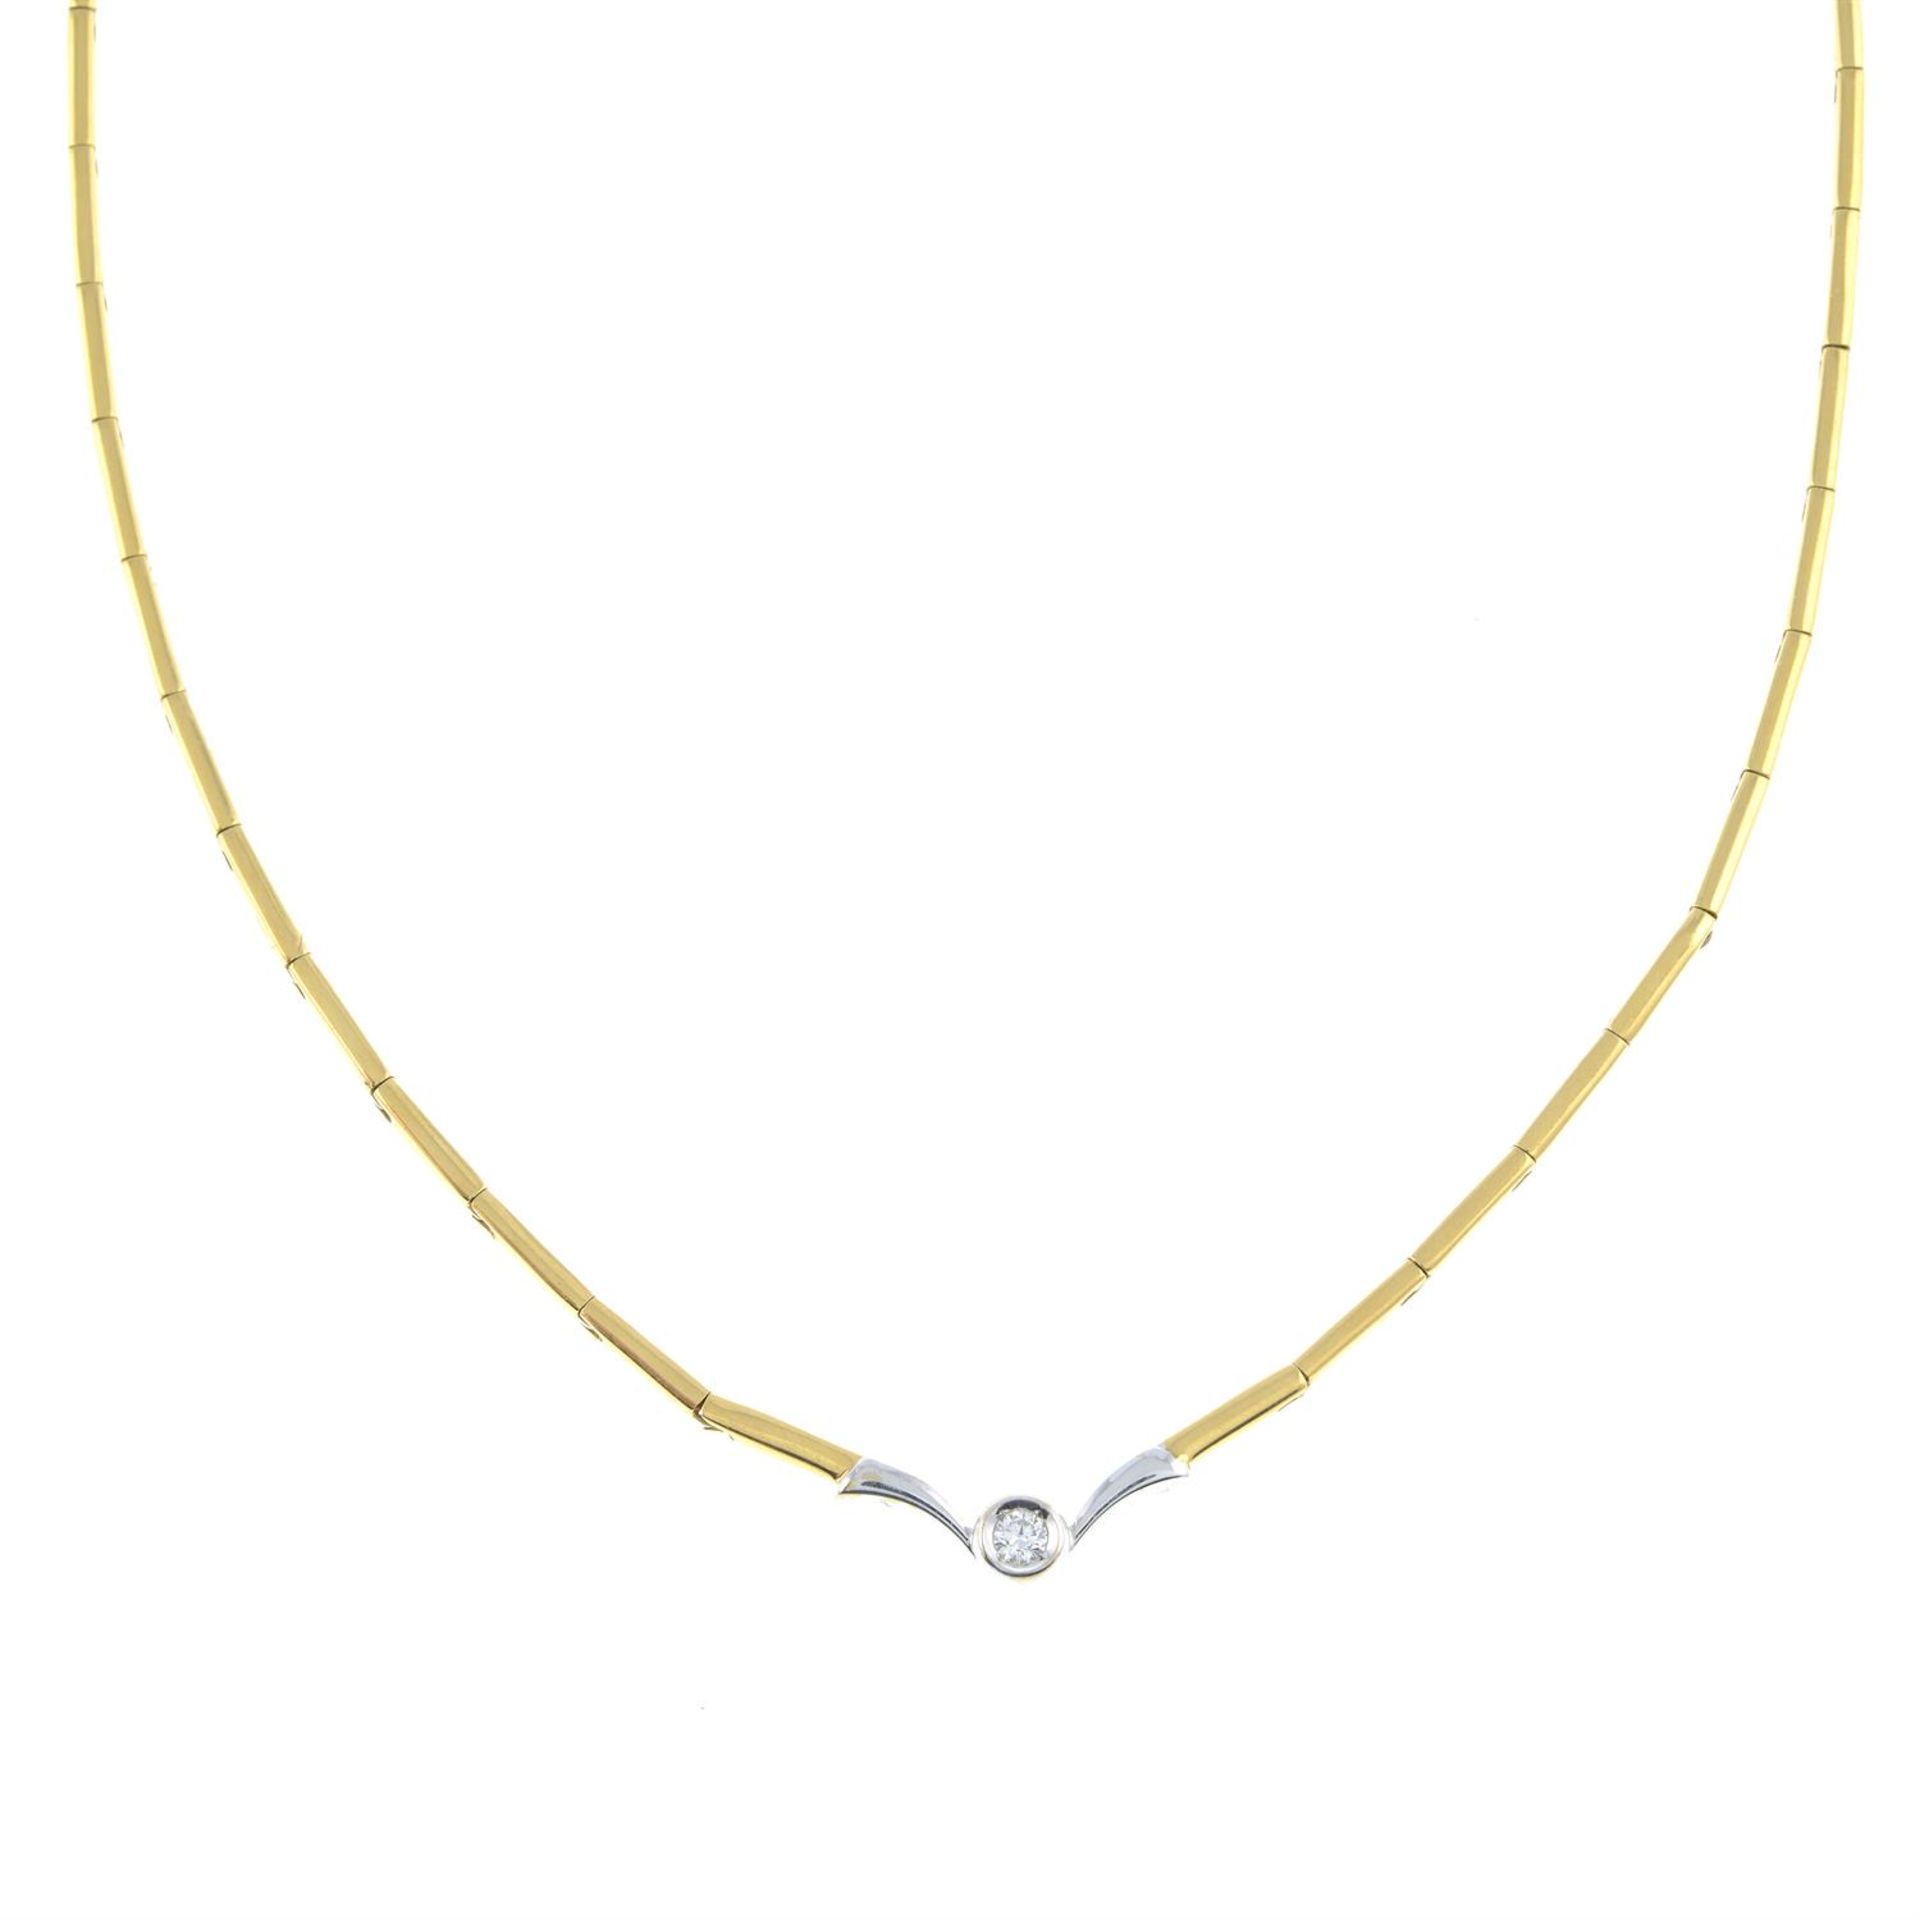 A diamond single-stone necklace, by Damiani.